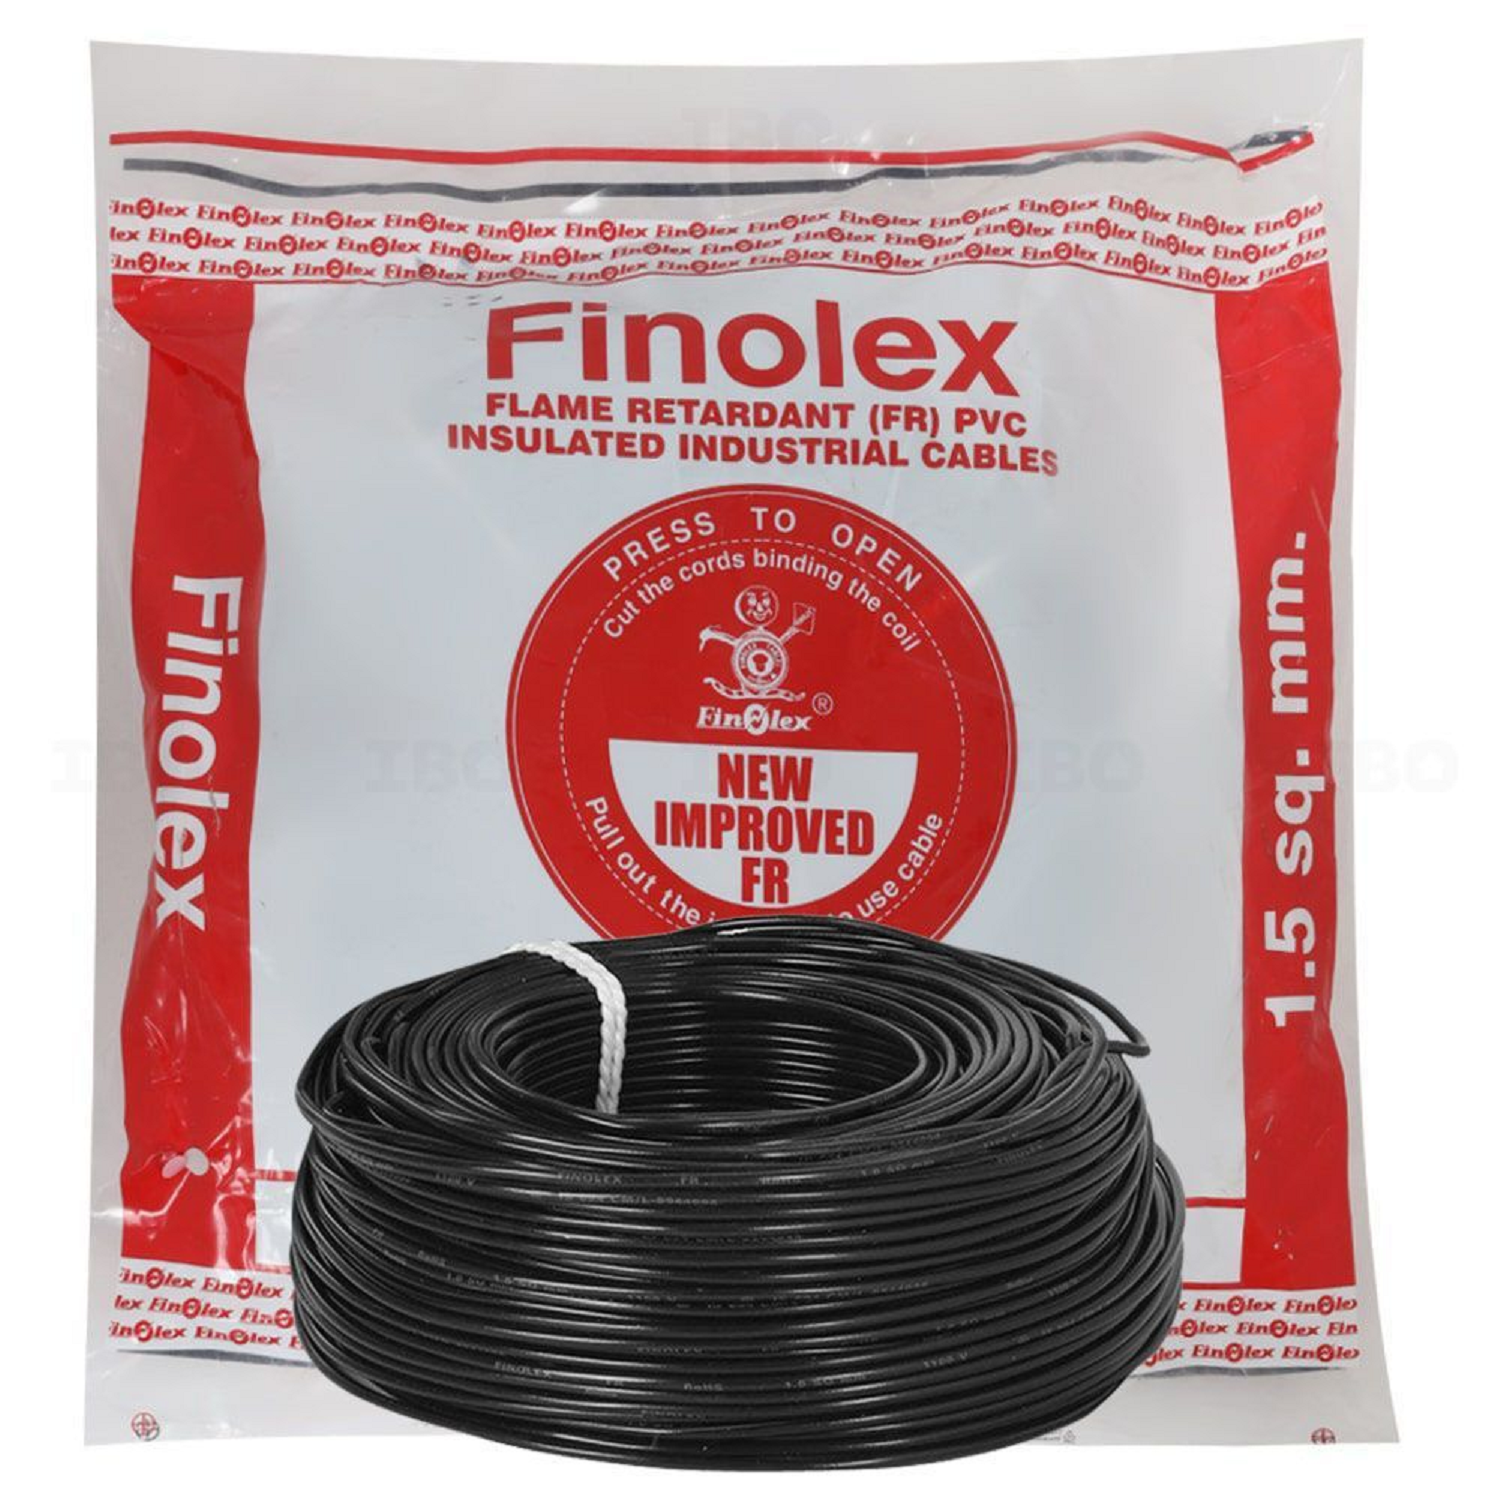 4.0 Sqmm Finolex FR Single Core Copper Wire (180 Mtr) With PVC Insulated for Domestic 38 Industrial 